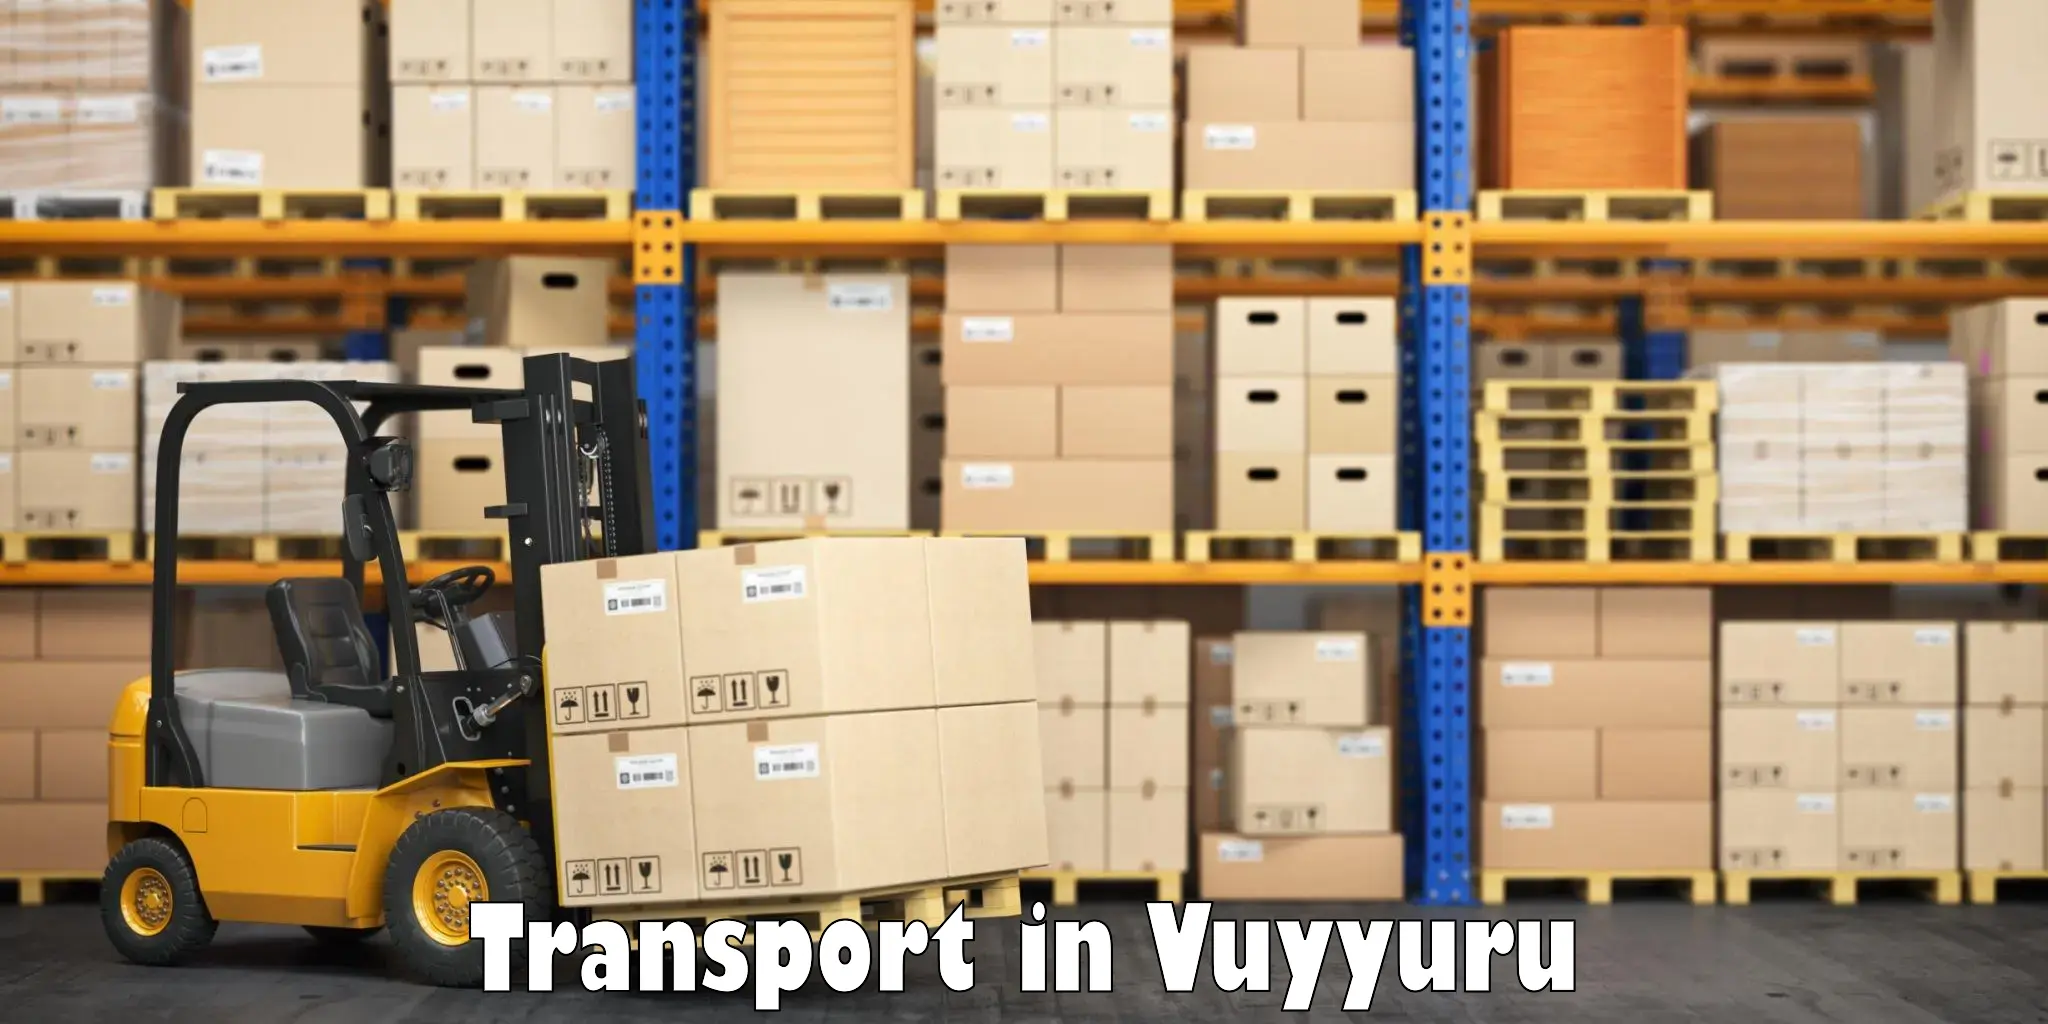 Road transport online services in Vuyyuru